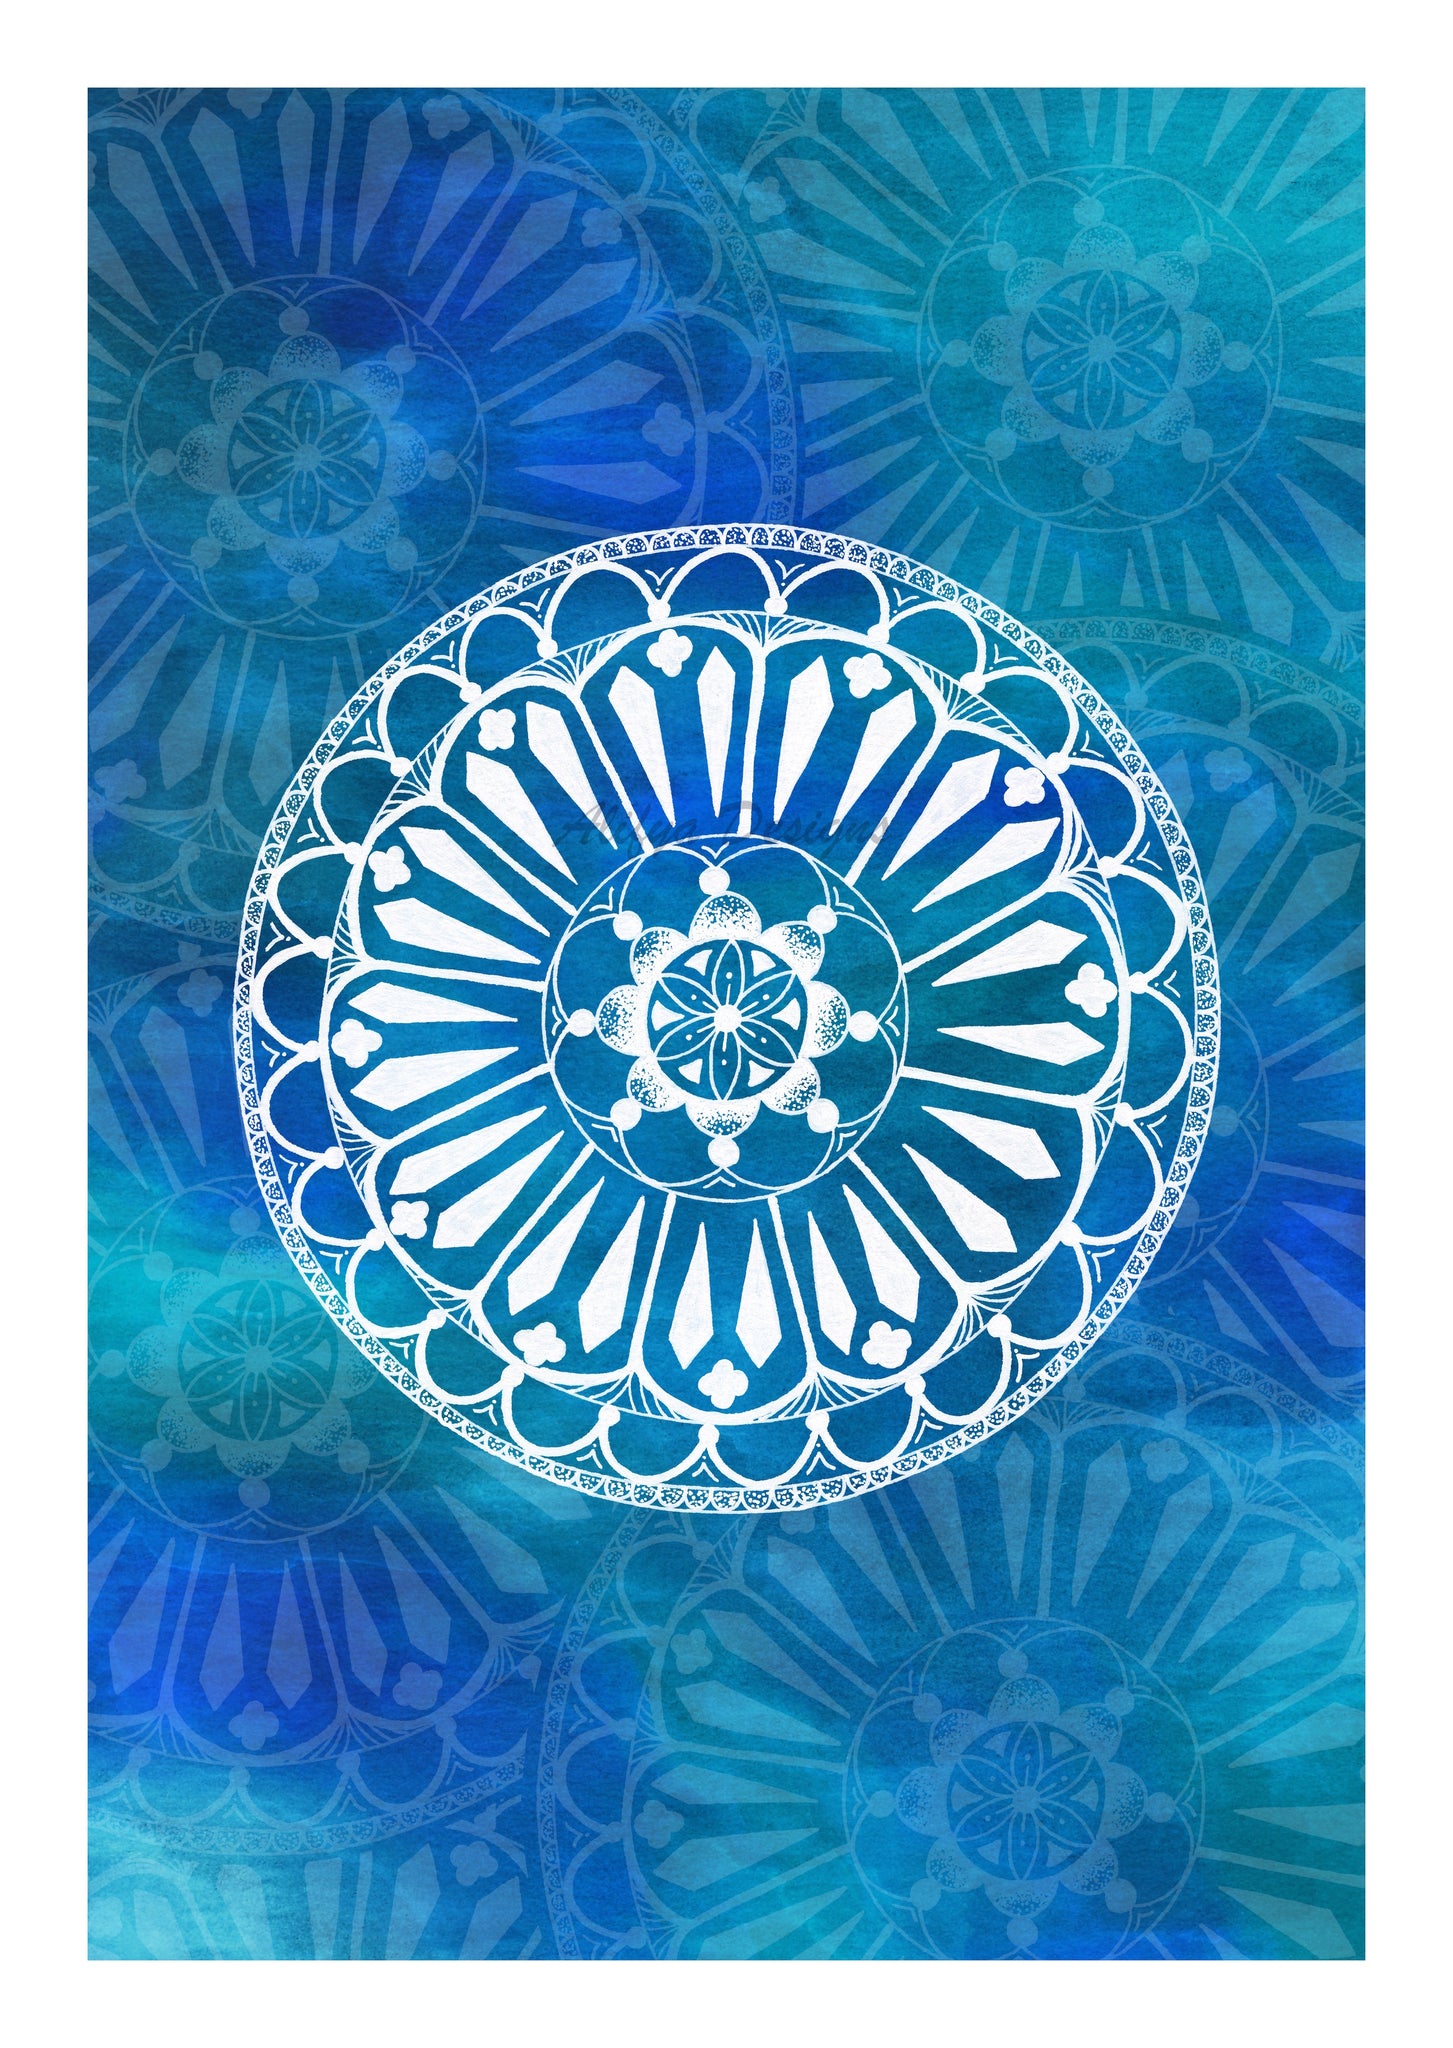 Colourful Mandala Art Print